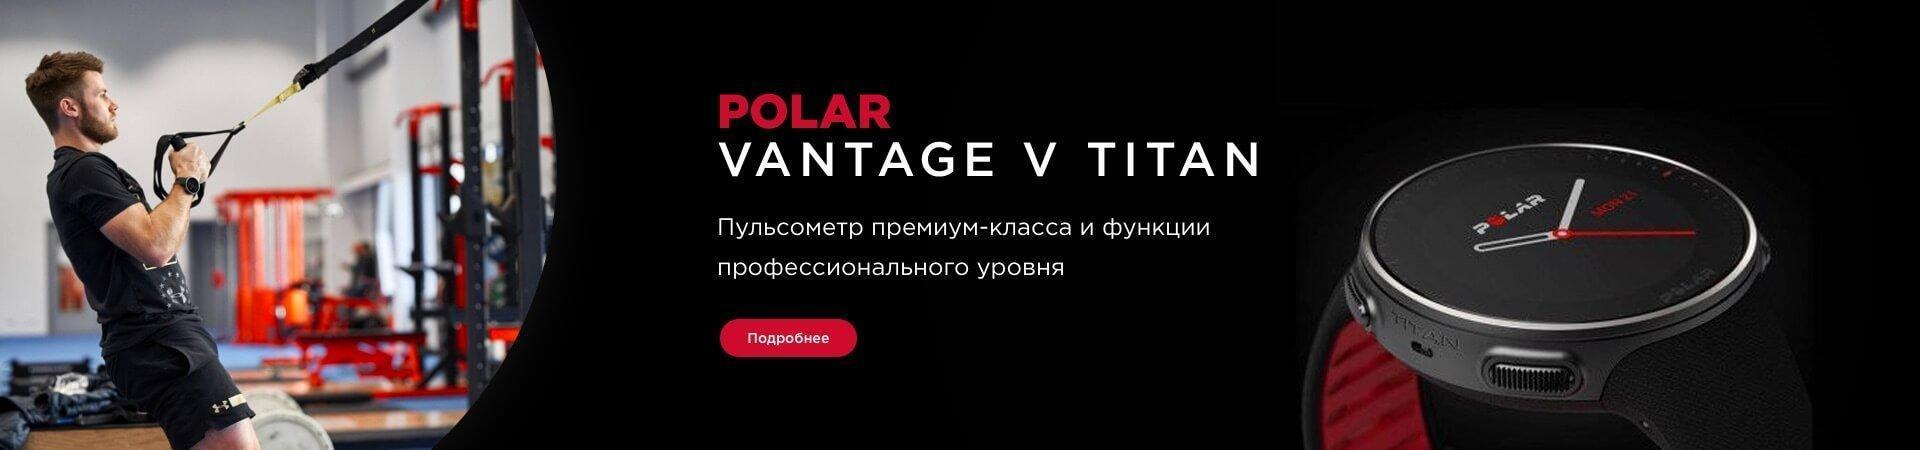 Polar Vantage V Titan